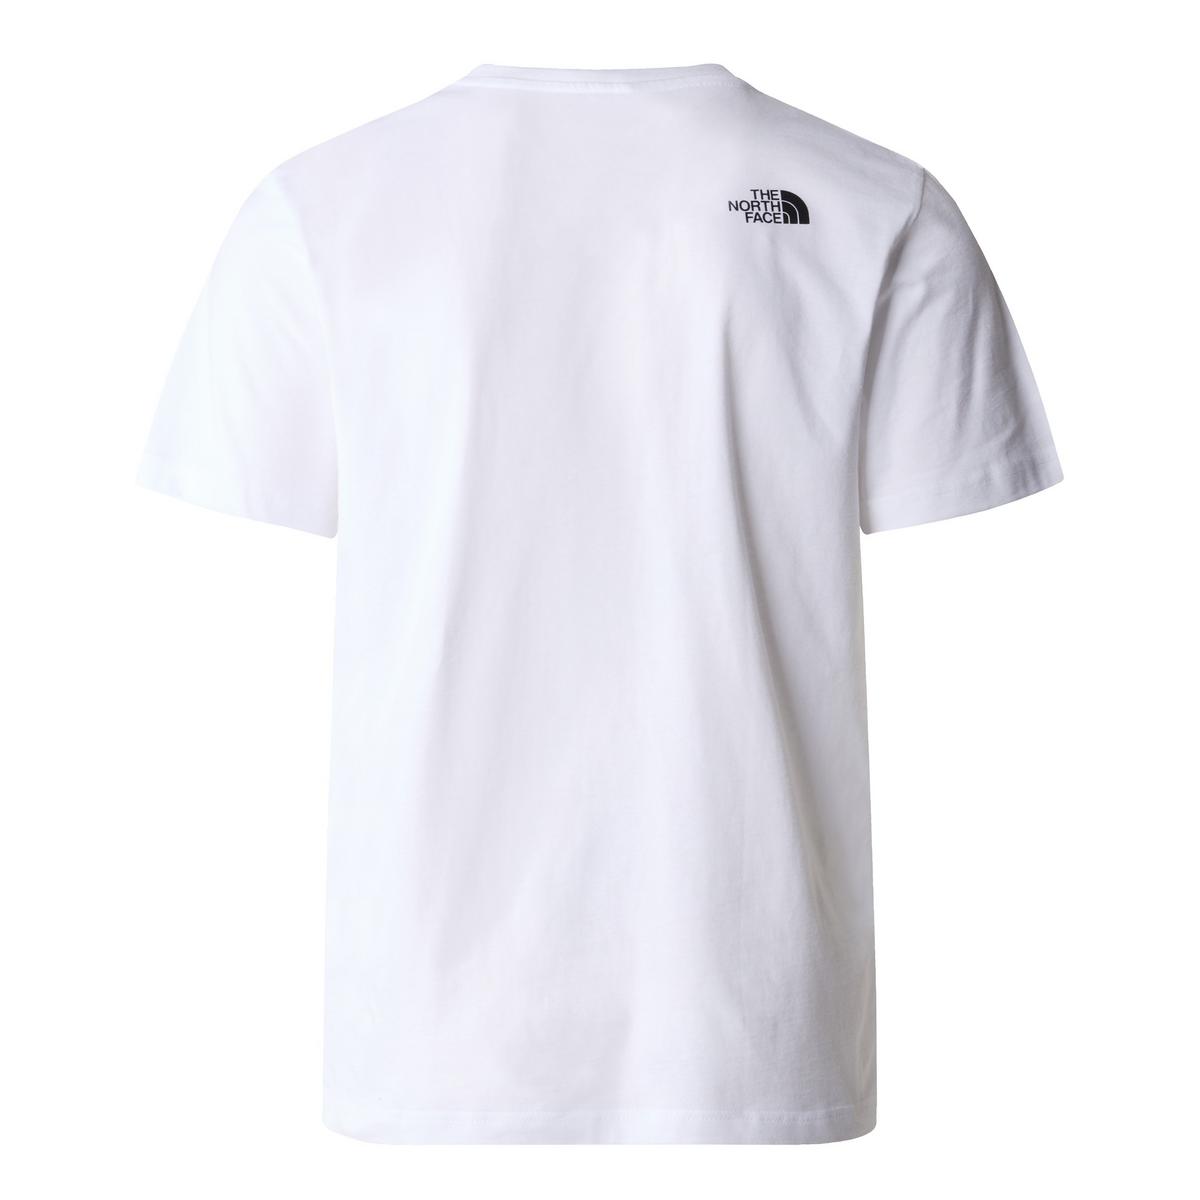 The North Face Men's Easy Short-Sleeve T-Shirt - White